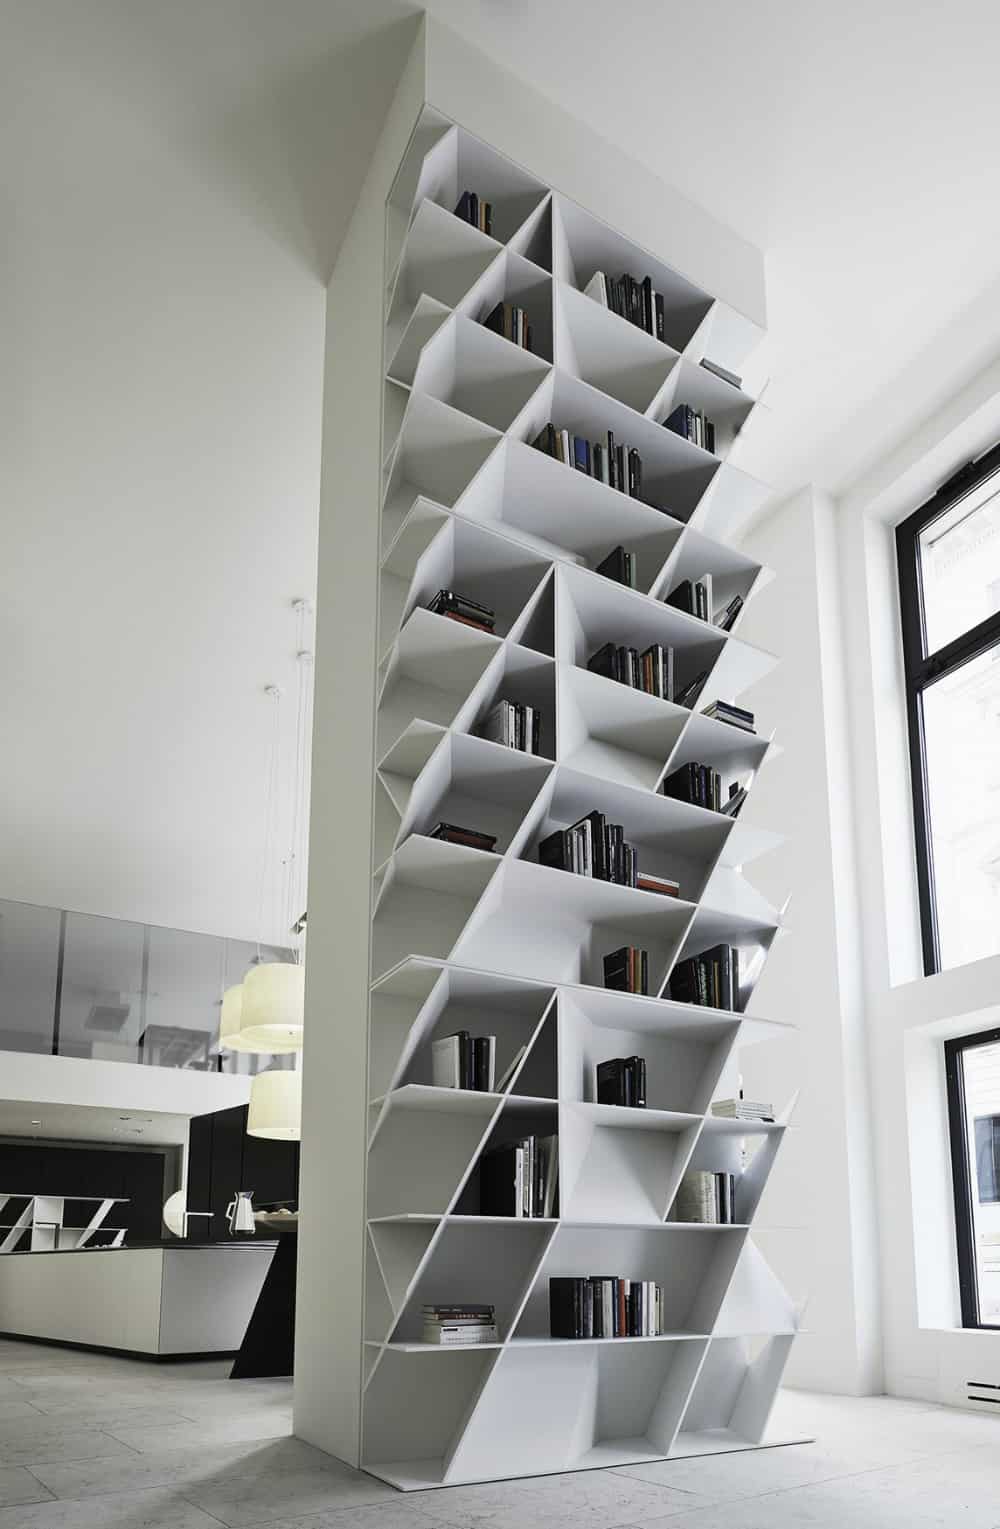 Sharp bookshelf by Daniel Libeskind